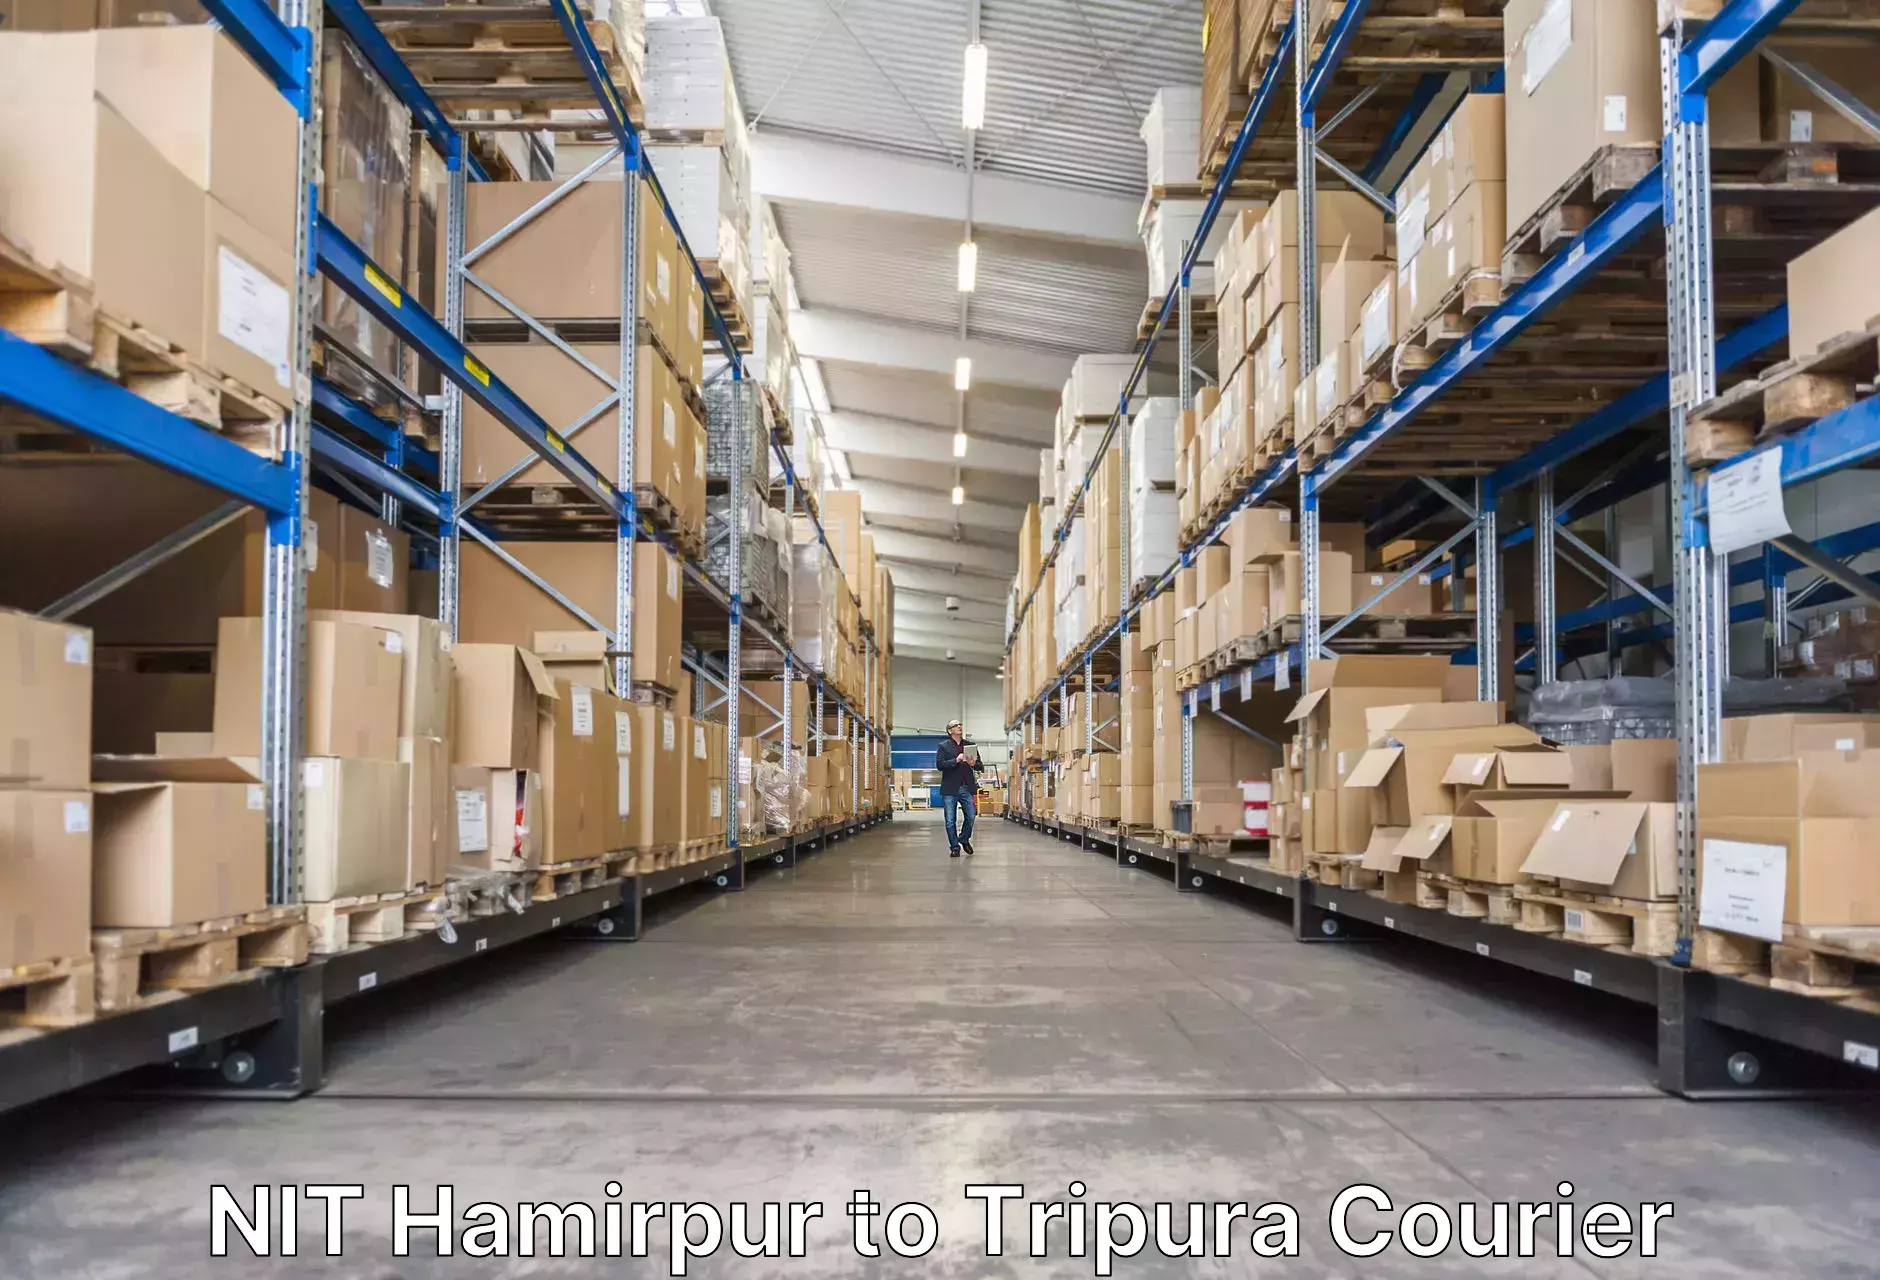 Luggage transport company NIT Hamirpur to Udaipur Tripura